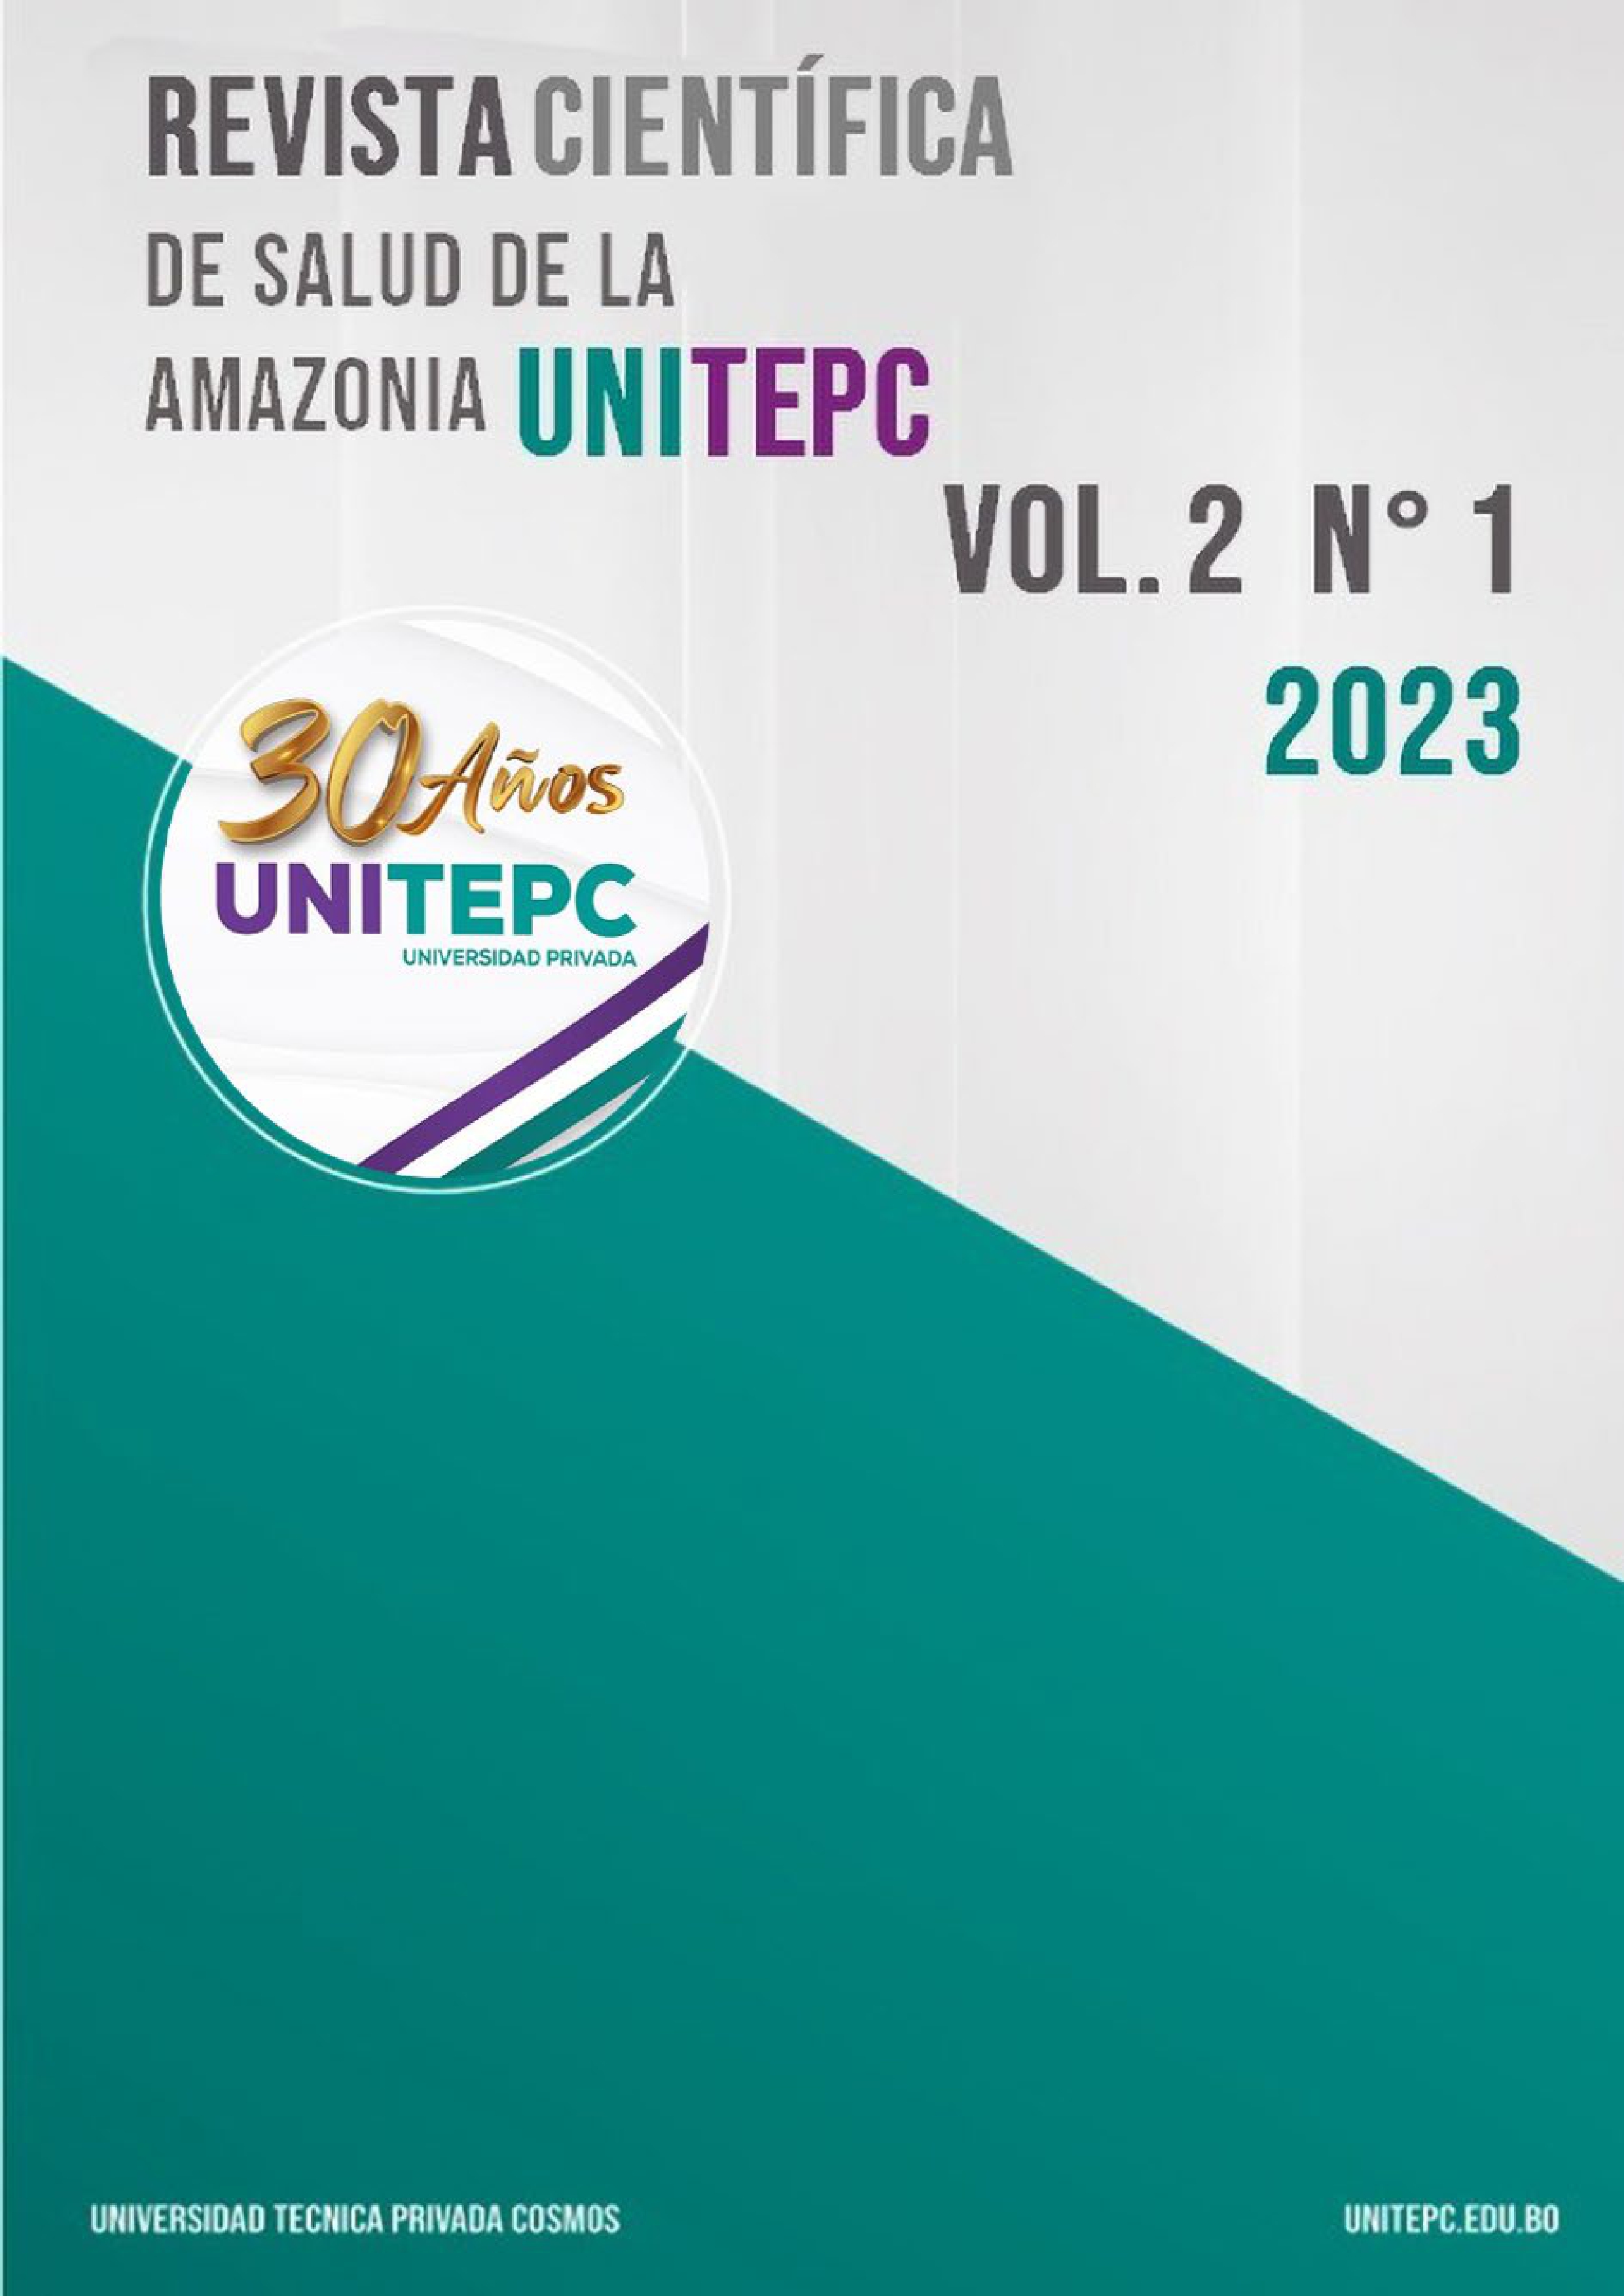 					Ver Vol. 2 Núm. 1 (2023): Revista Científica de Salud de la Amazonia UNITEPC
				